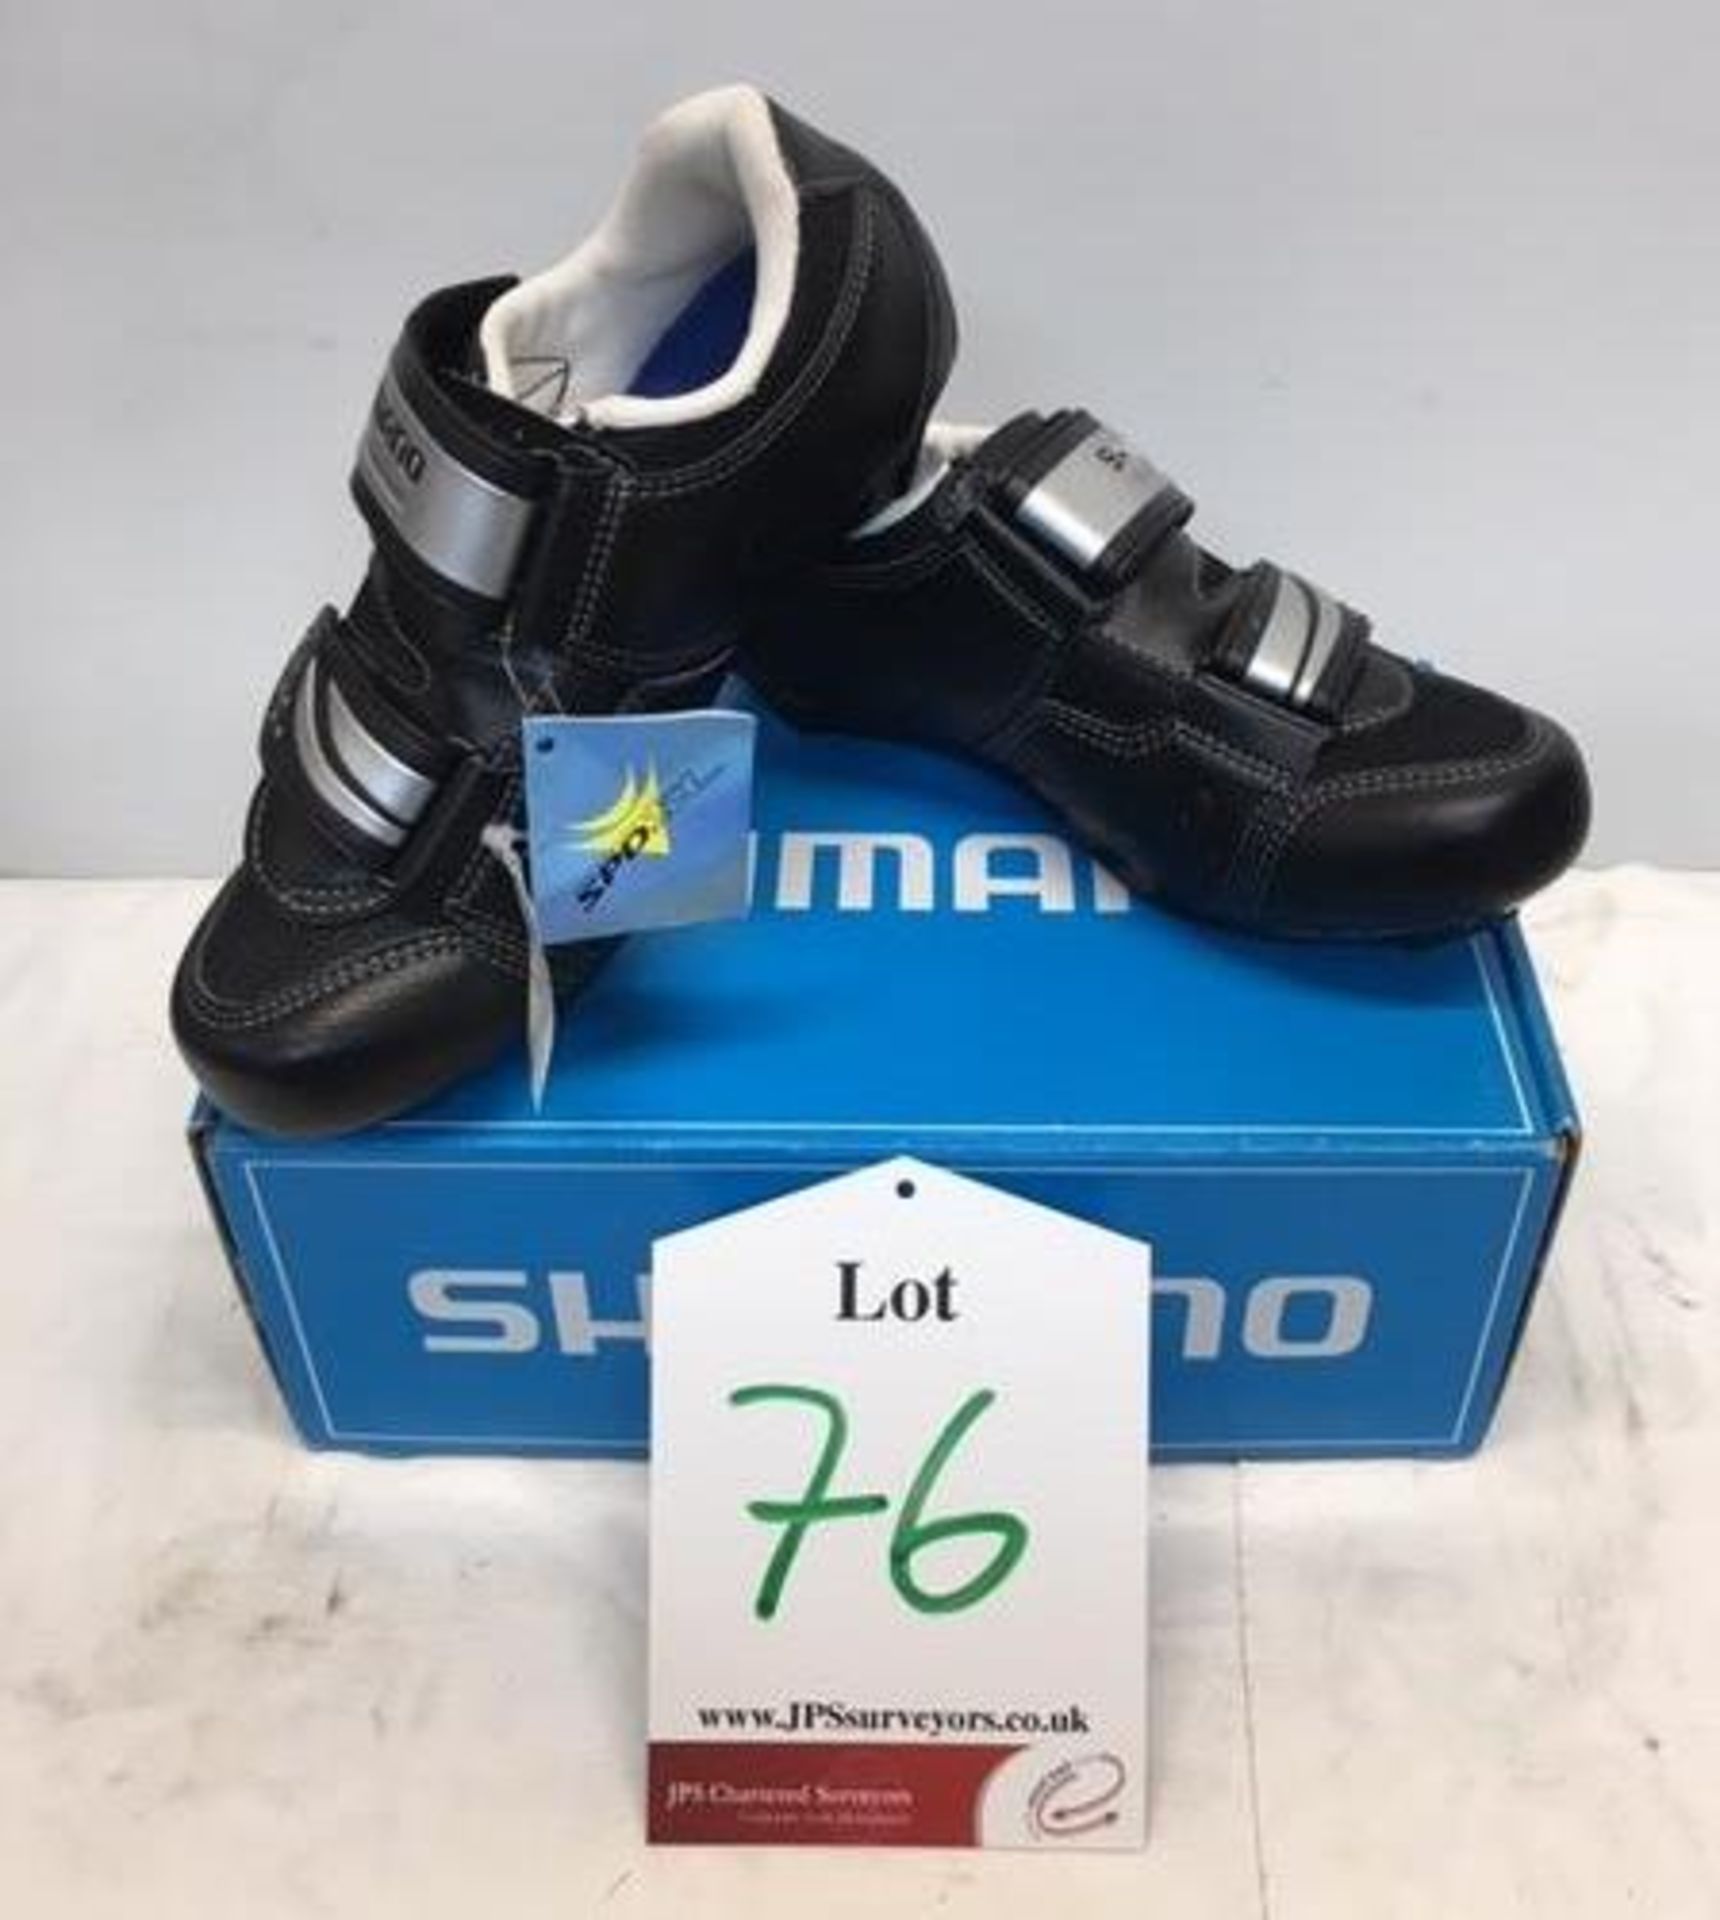 Shimano R063 Cycling Shoes | N/A | RRP £50.00